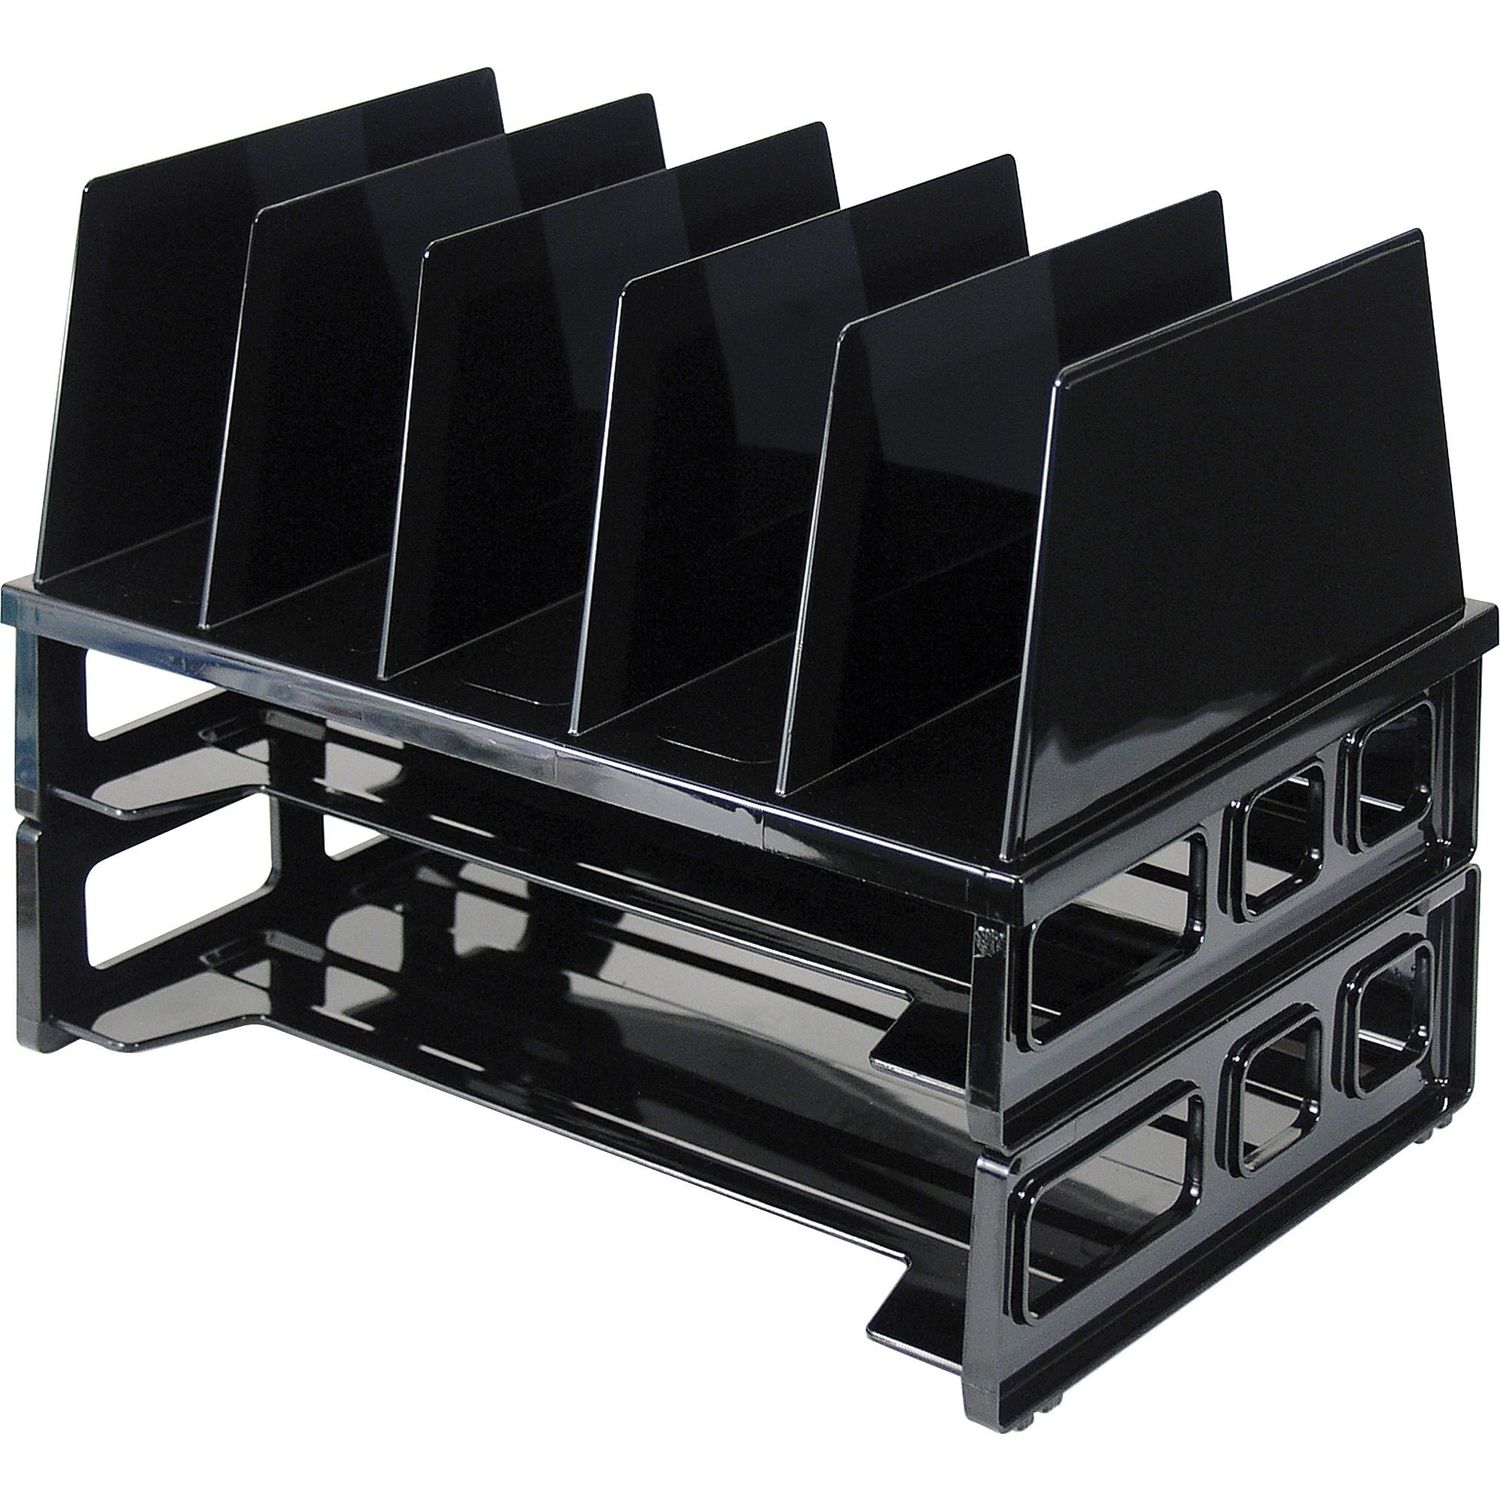 Tray/Sorter Combo 5 Compartment(s), 10.3" Height x 13.5" Width x 9.1" Depth, Desktop, Stackable, Black, 1 / Pack